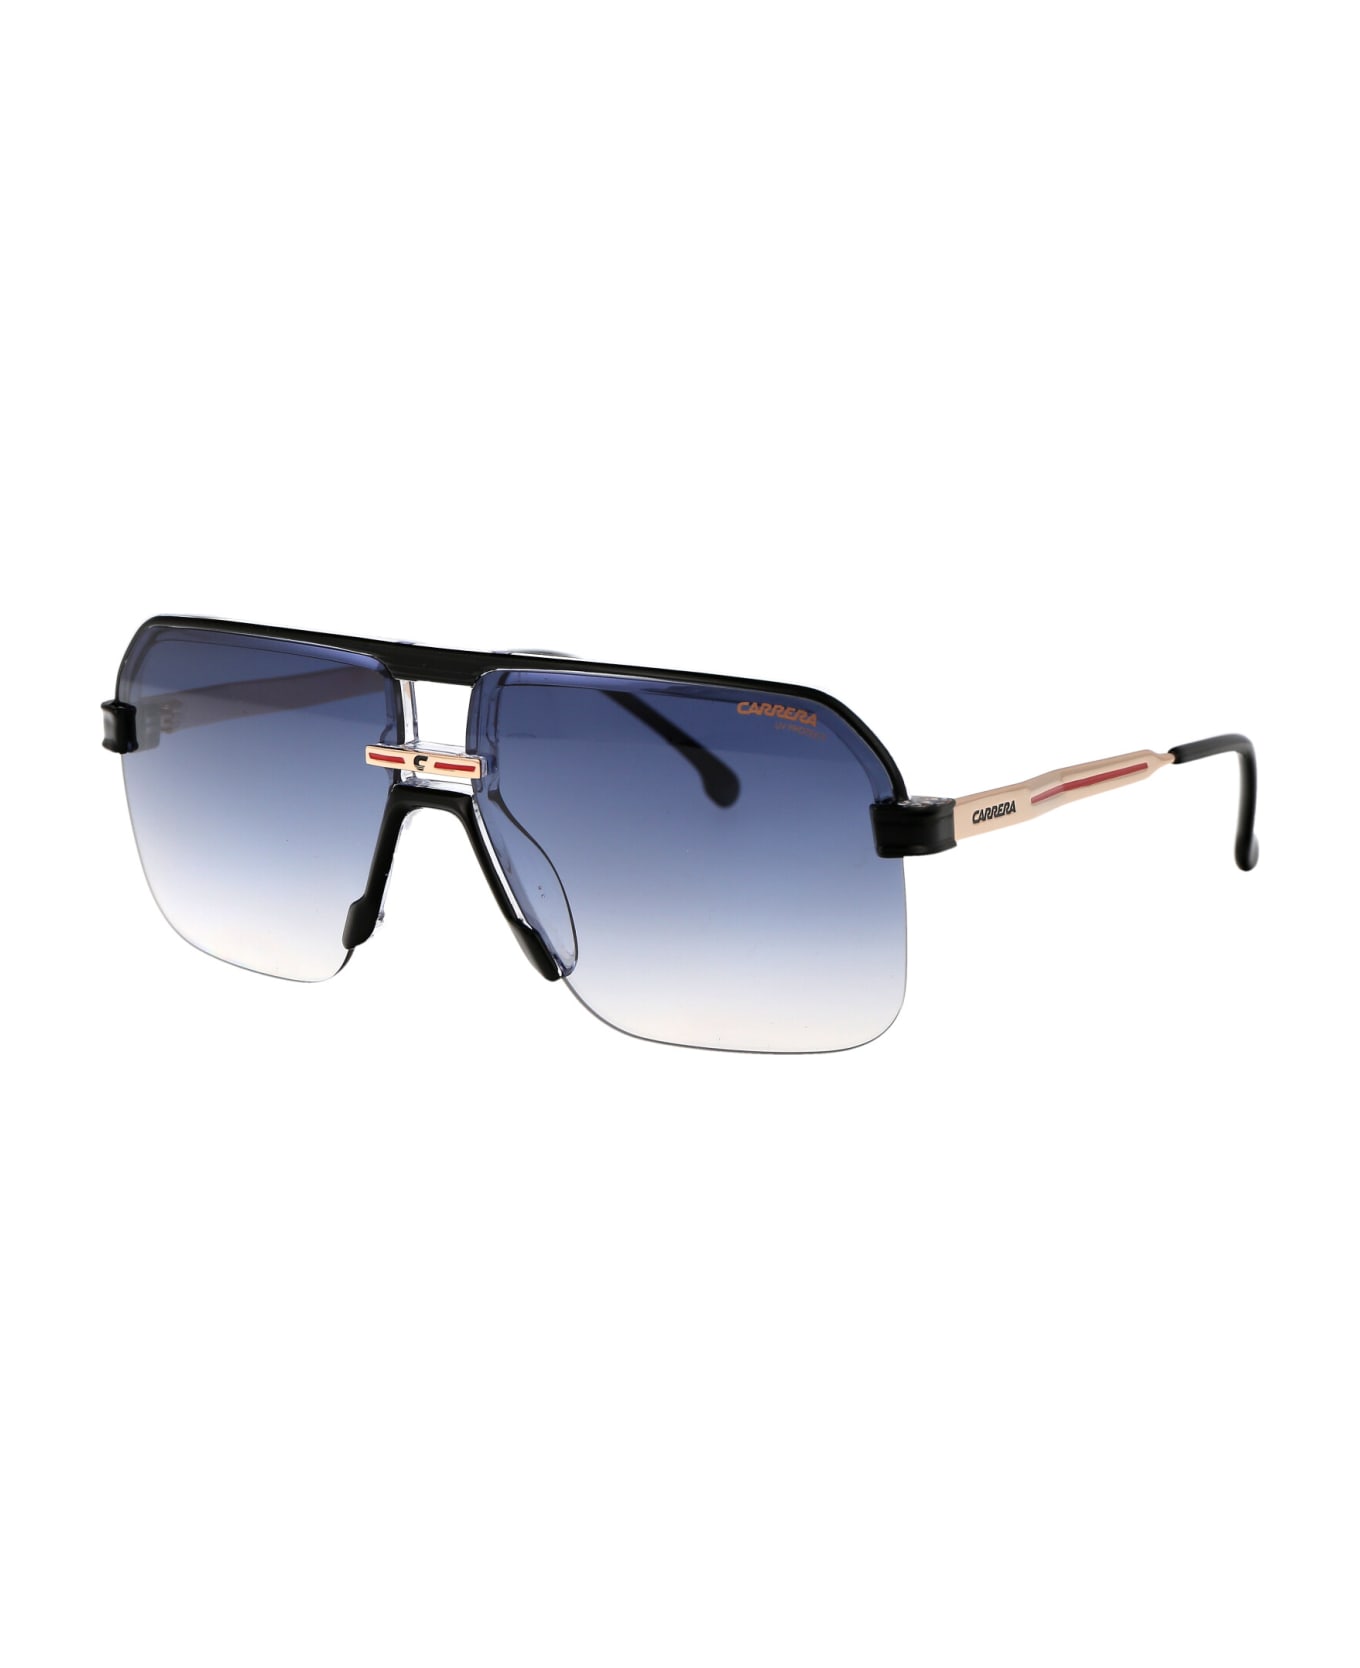 Carrera 1066/s Sunglasses - 7C508 BLACK CRY